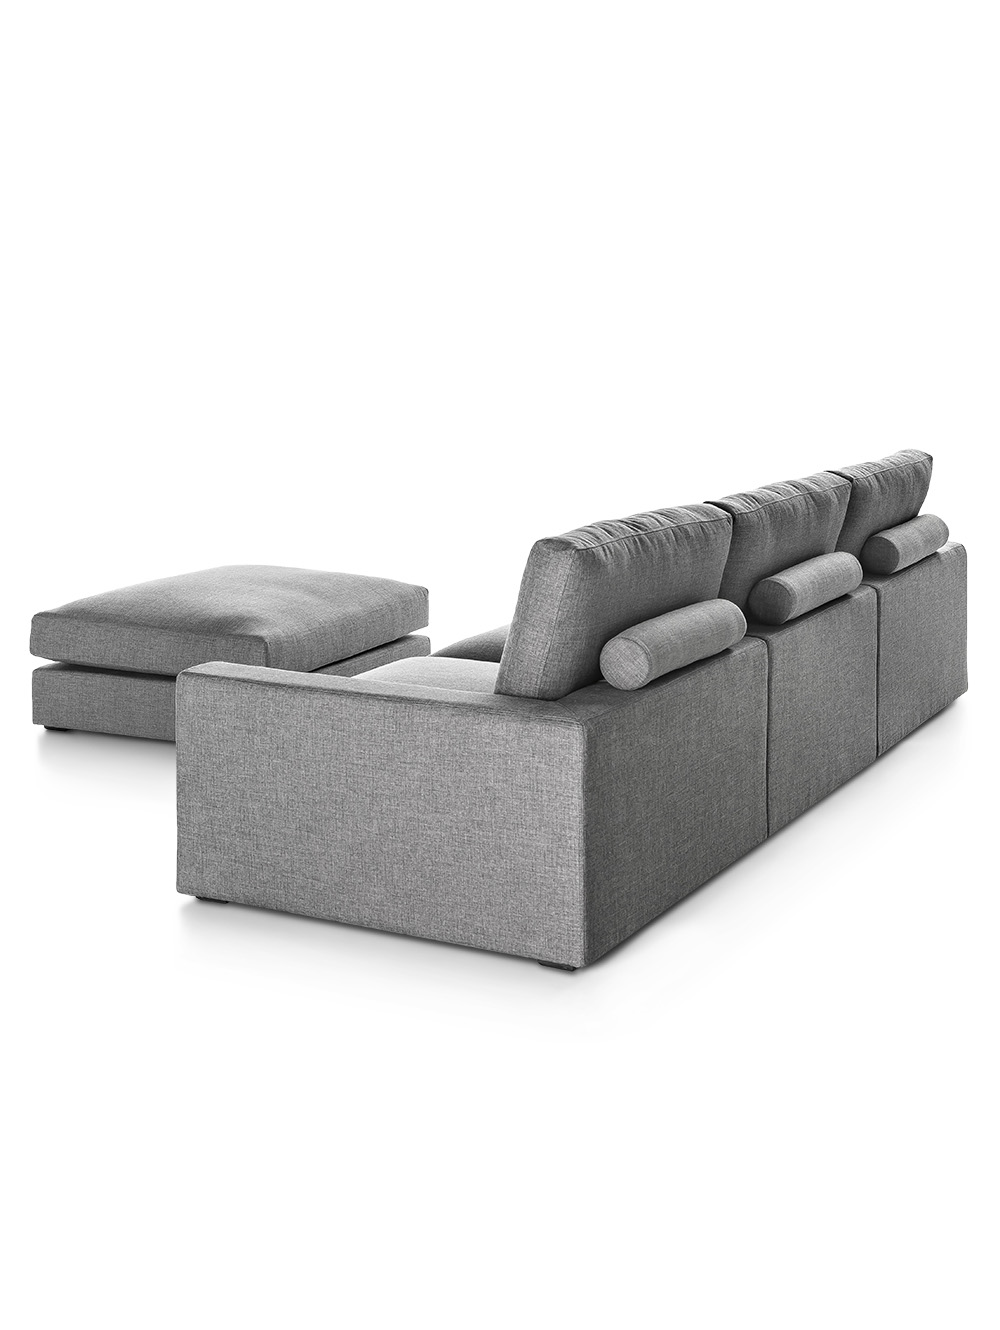 Sofa en ele gris oscuro-SOFA BELMONT SPAZIO PETROLEO-Landmark-3.jpg image number null